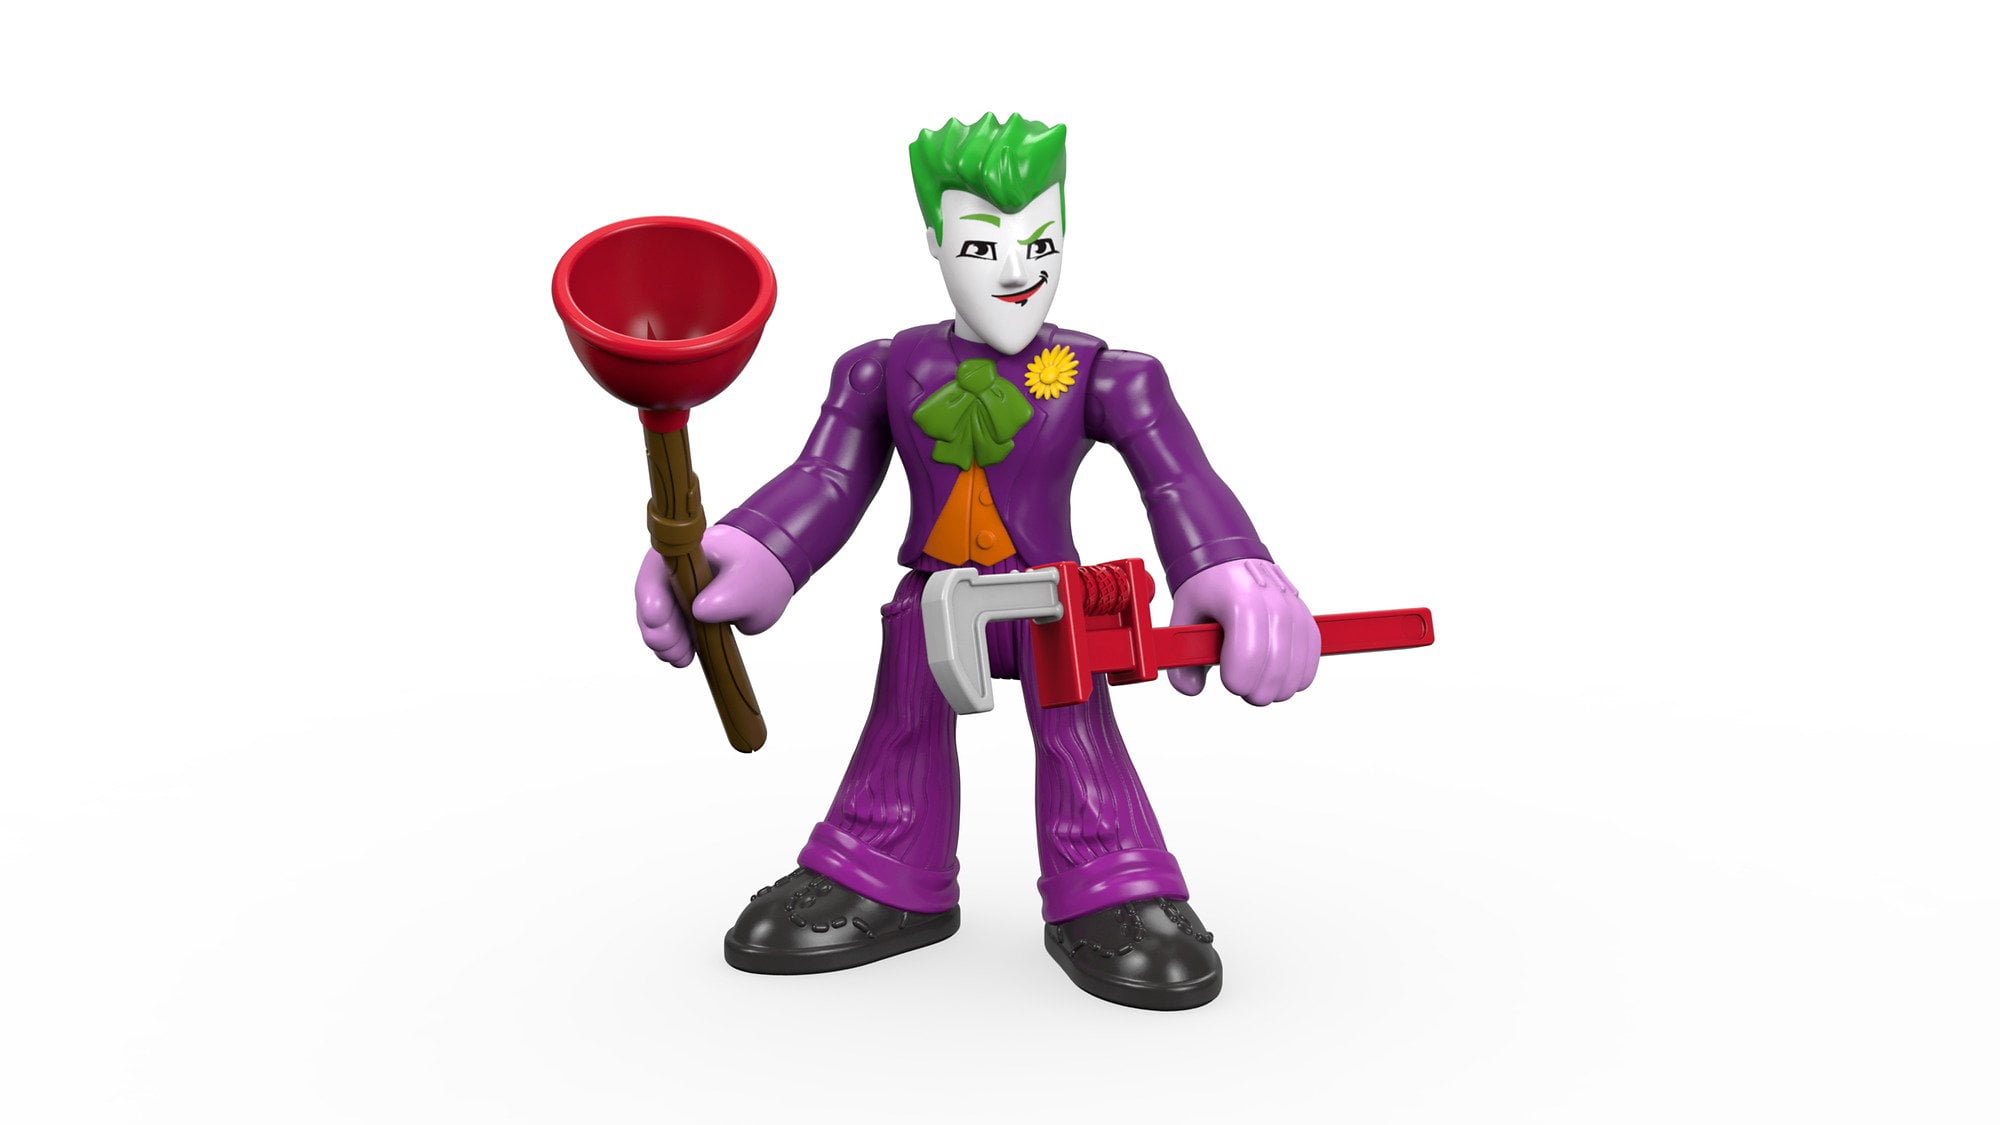 Fisher-Price Imaginext DC Super Friends The Joker Deluxe Gift Set